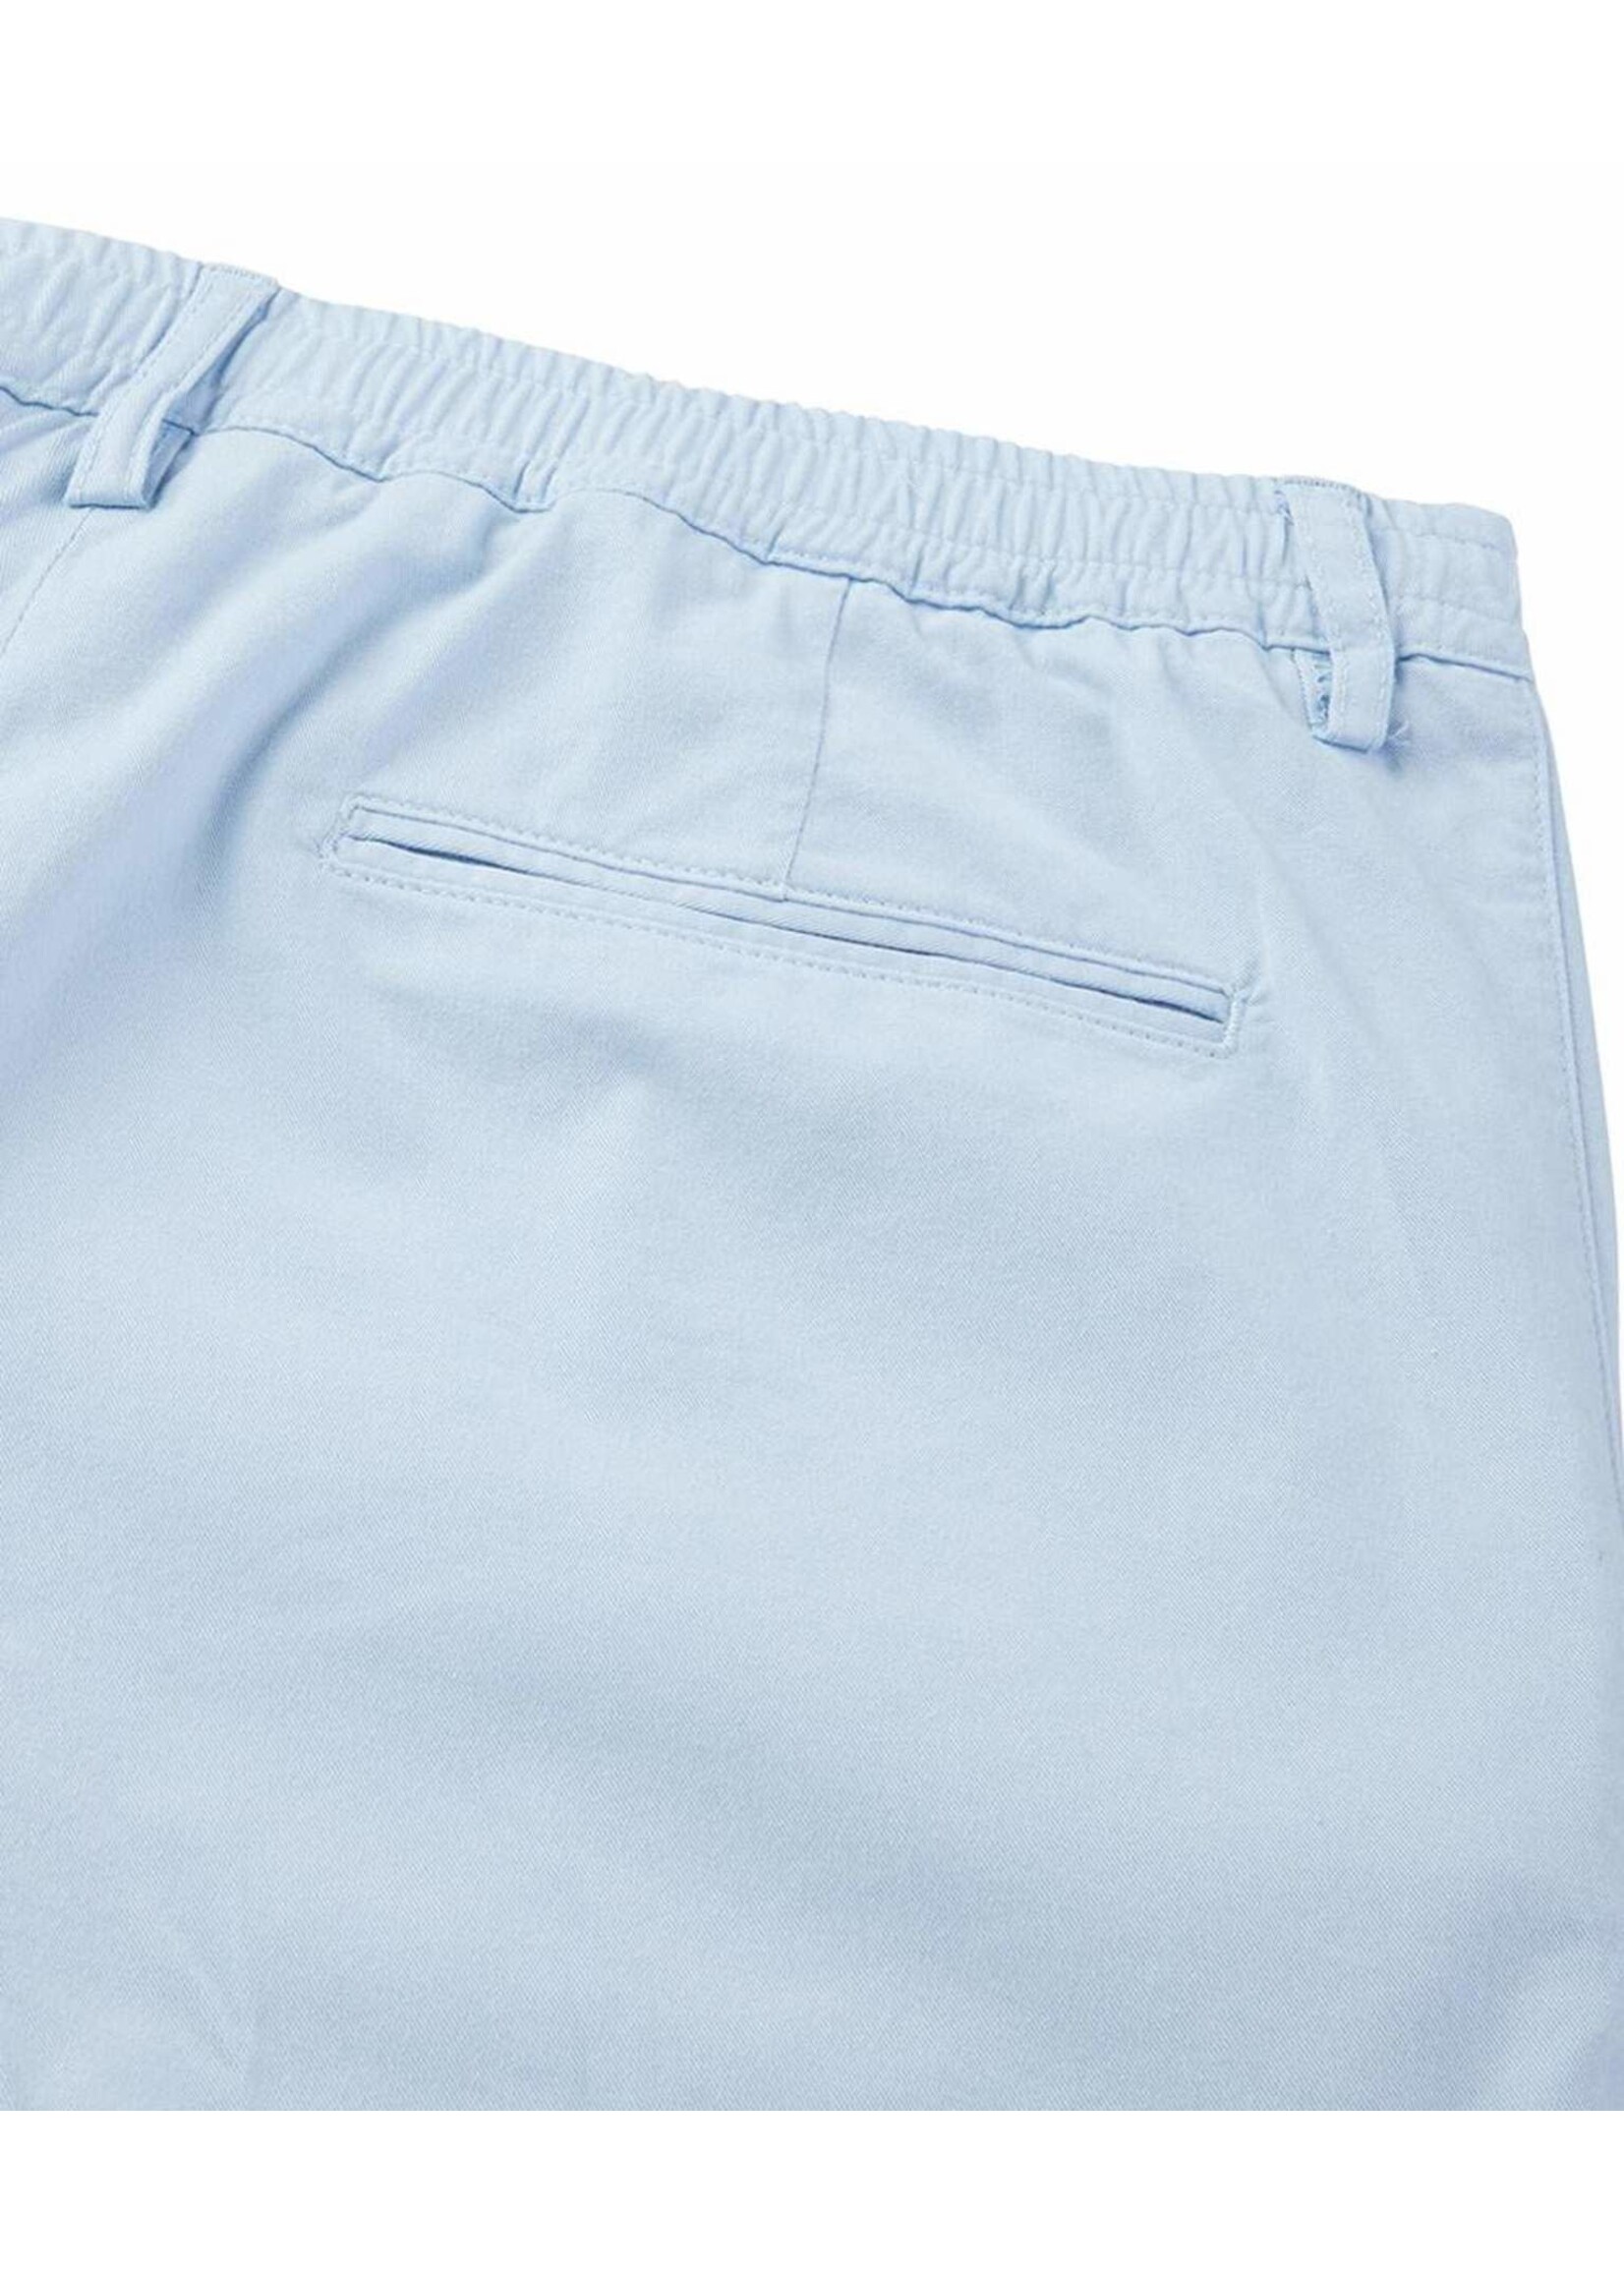 Profuomo Trouser Short Light Blue 48